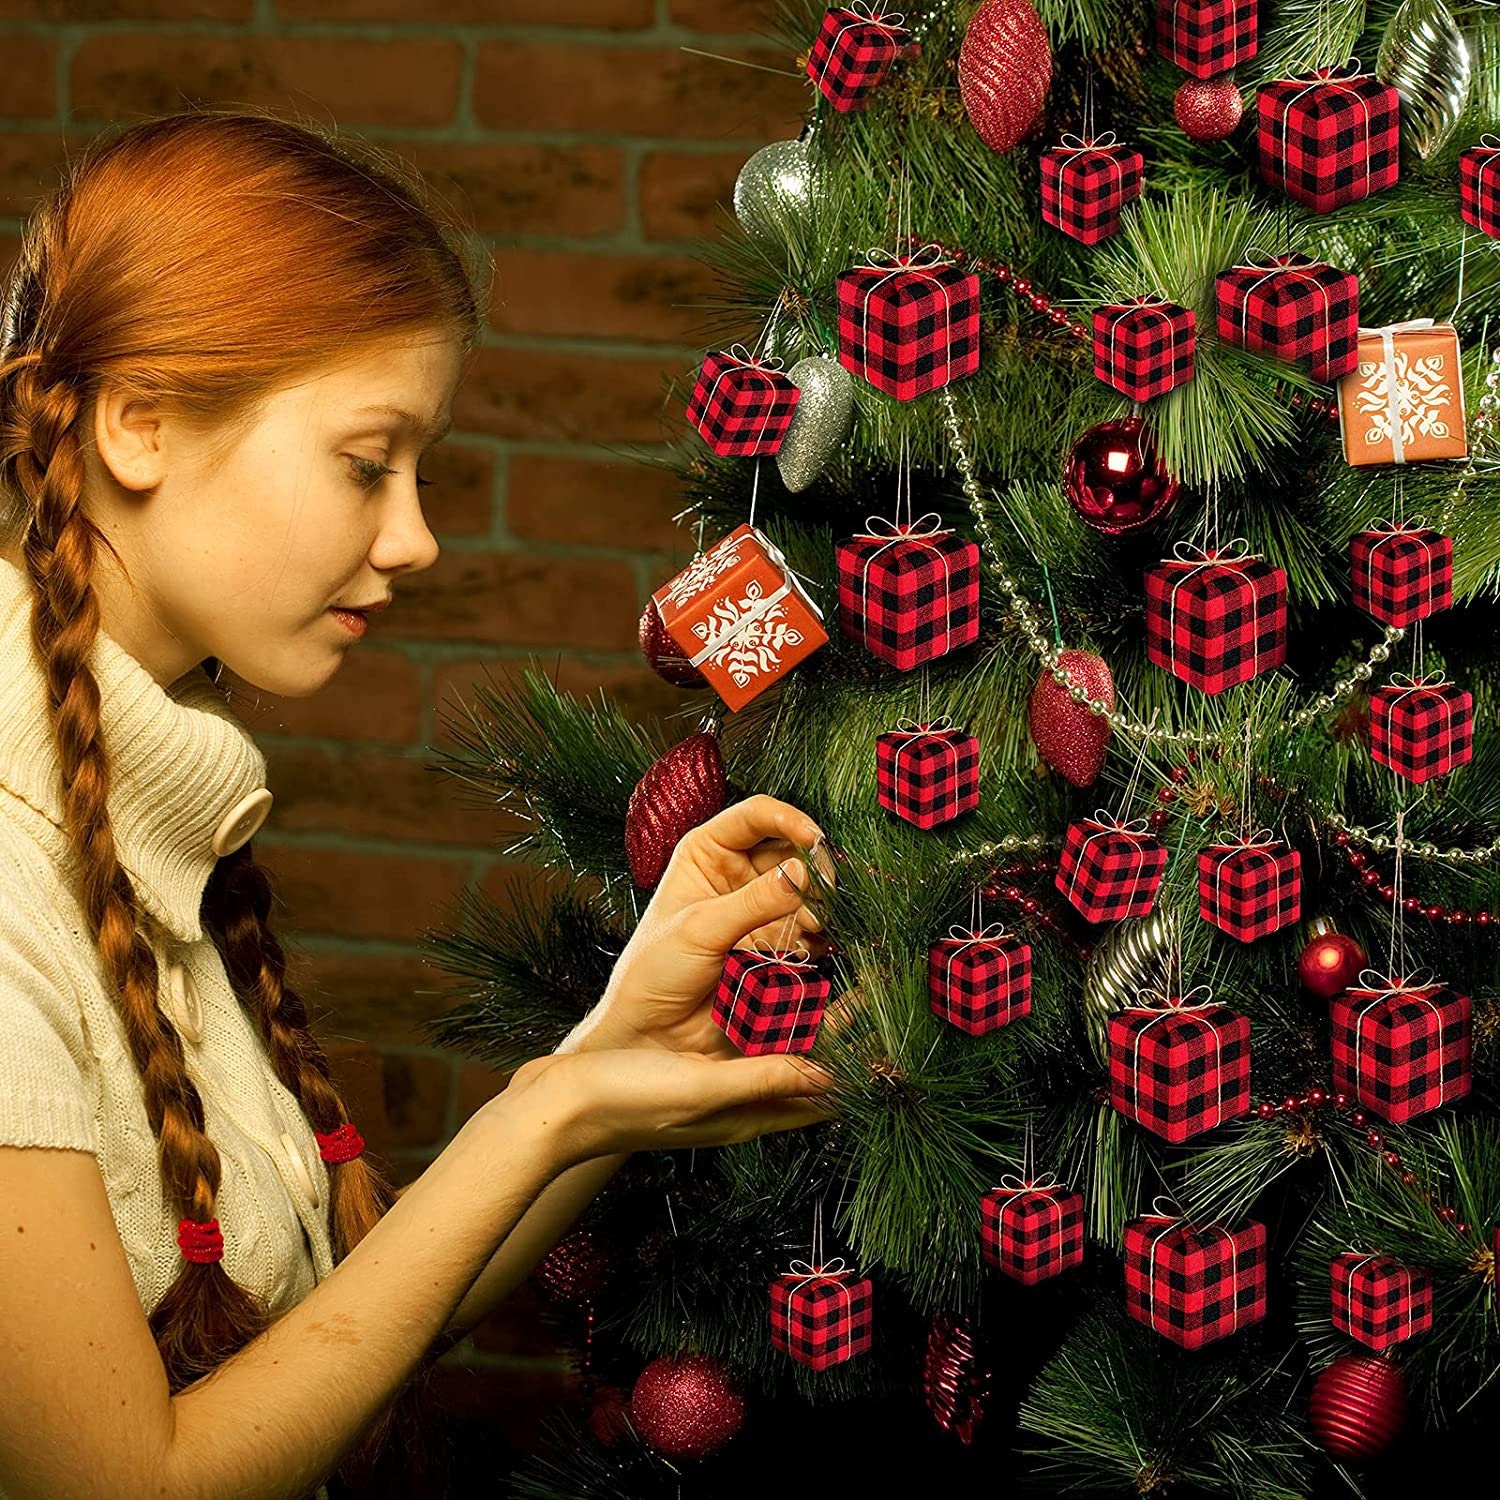 24 Mini Christmas Ornaments, Buffalo Plaid Christmas Decor